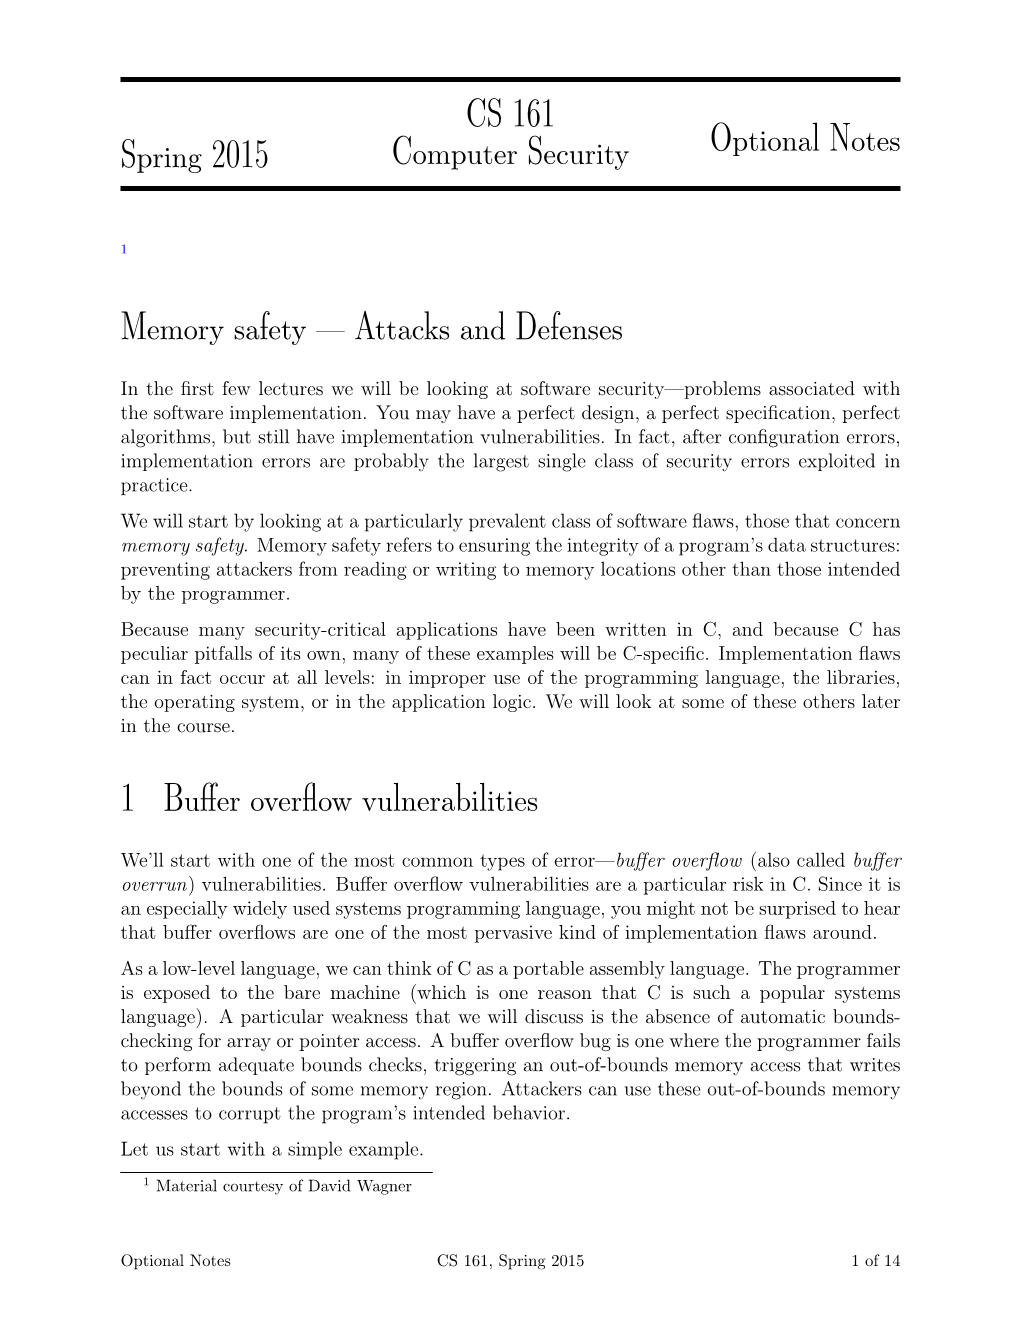 Spring 2015 CS 161 Computer Security Optional Notes Memory